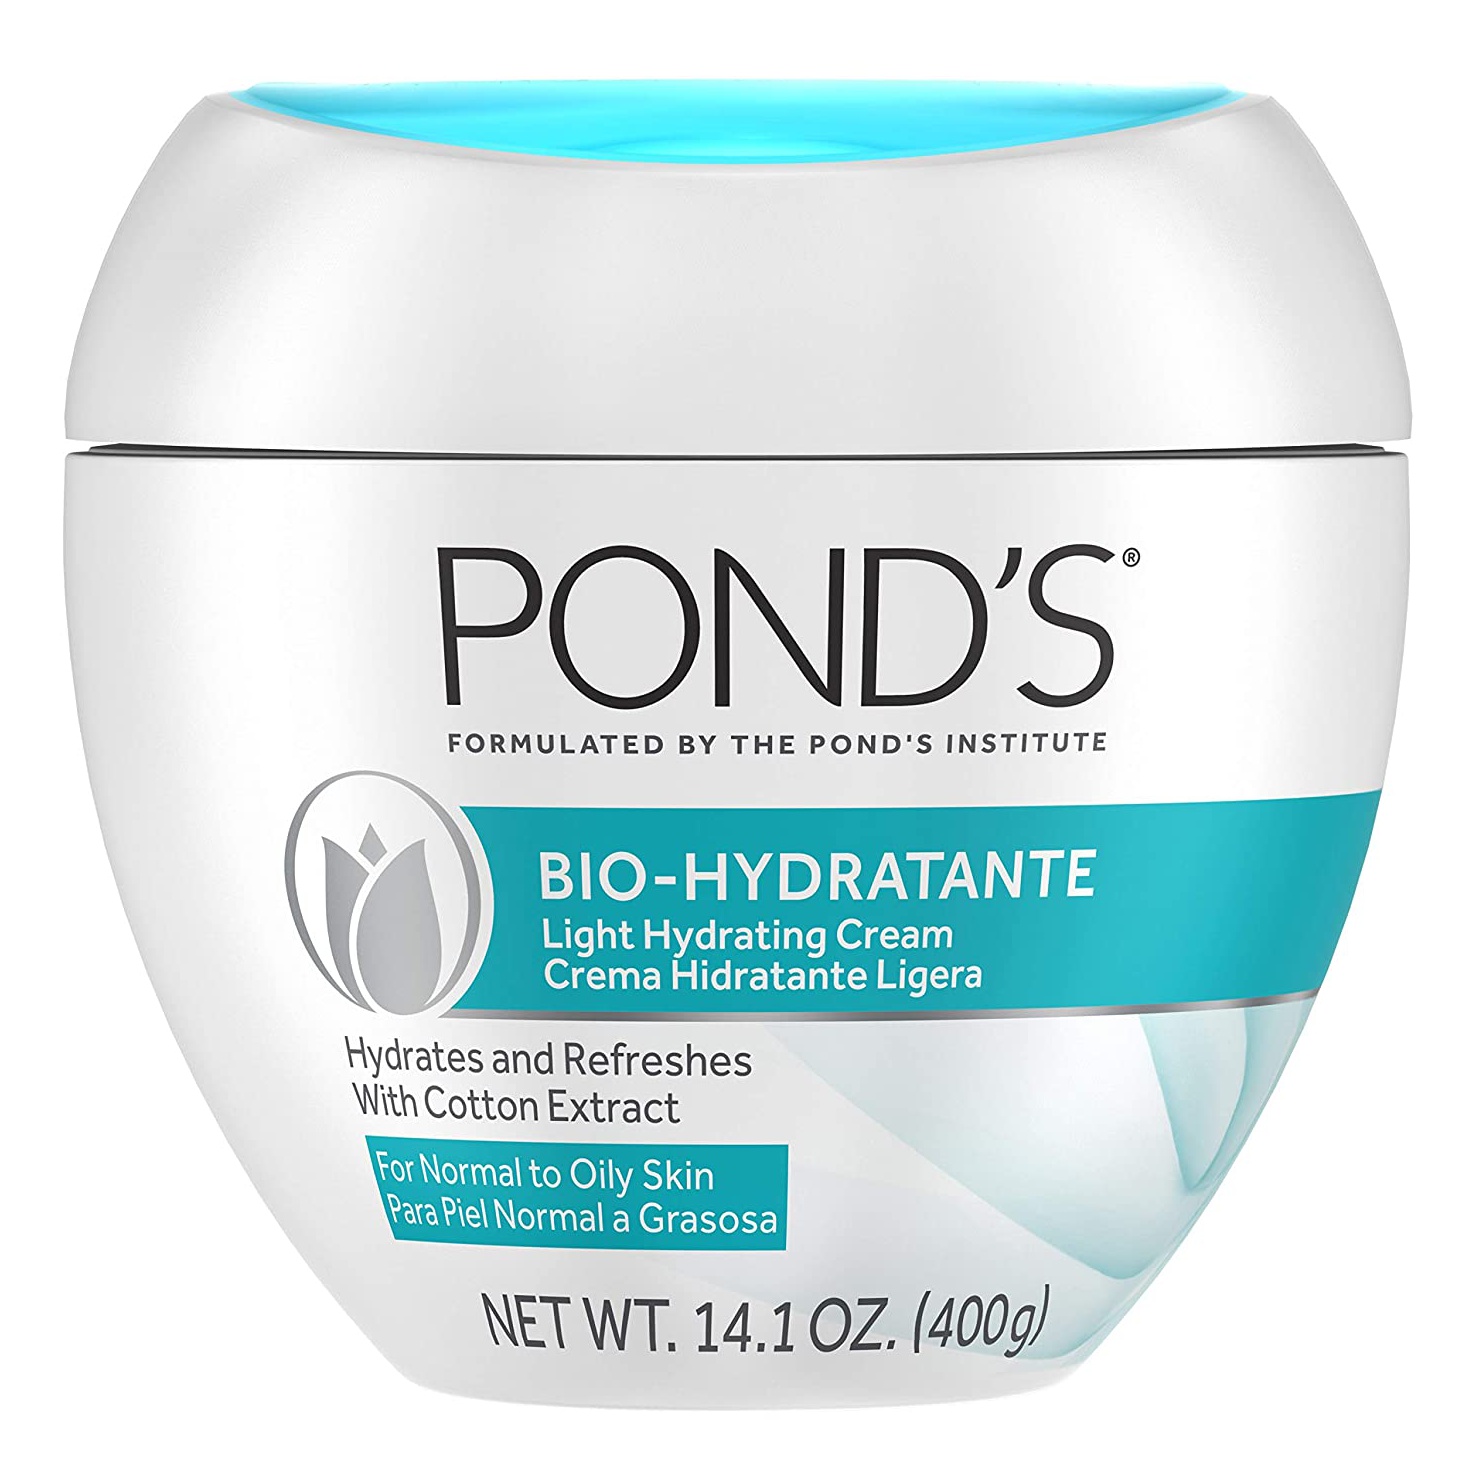 Pond's Bio Hydratante Face Moisturizer